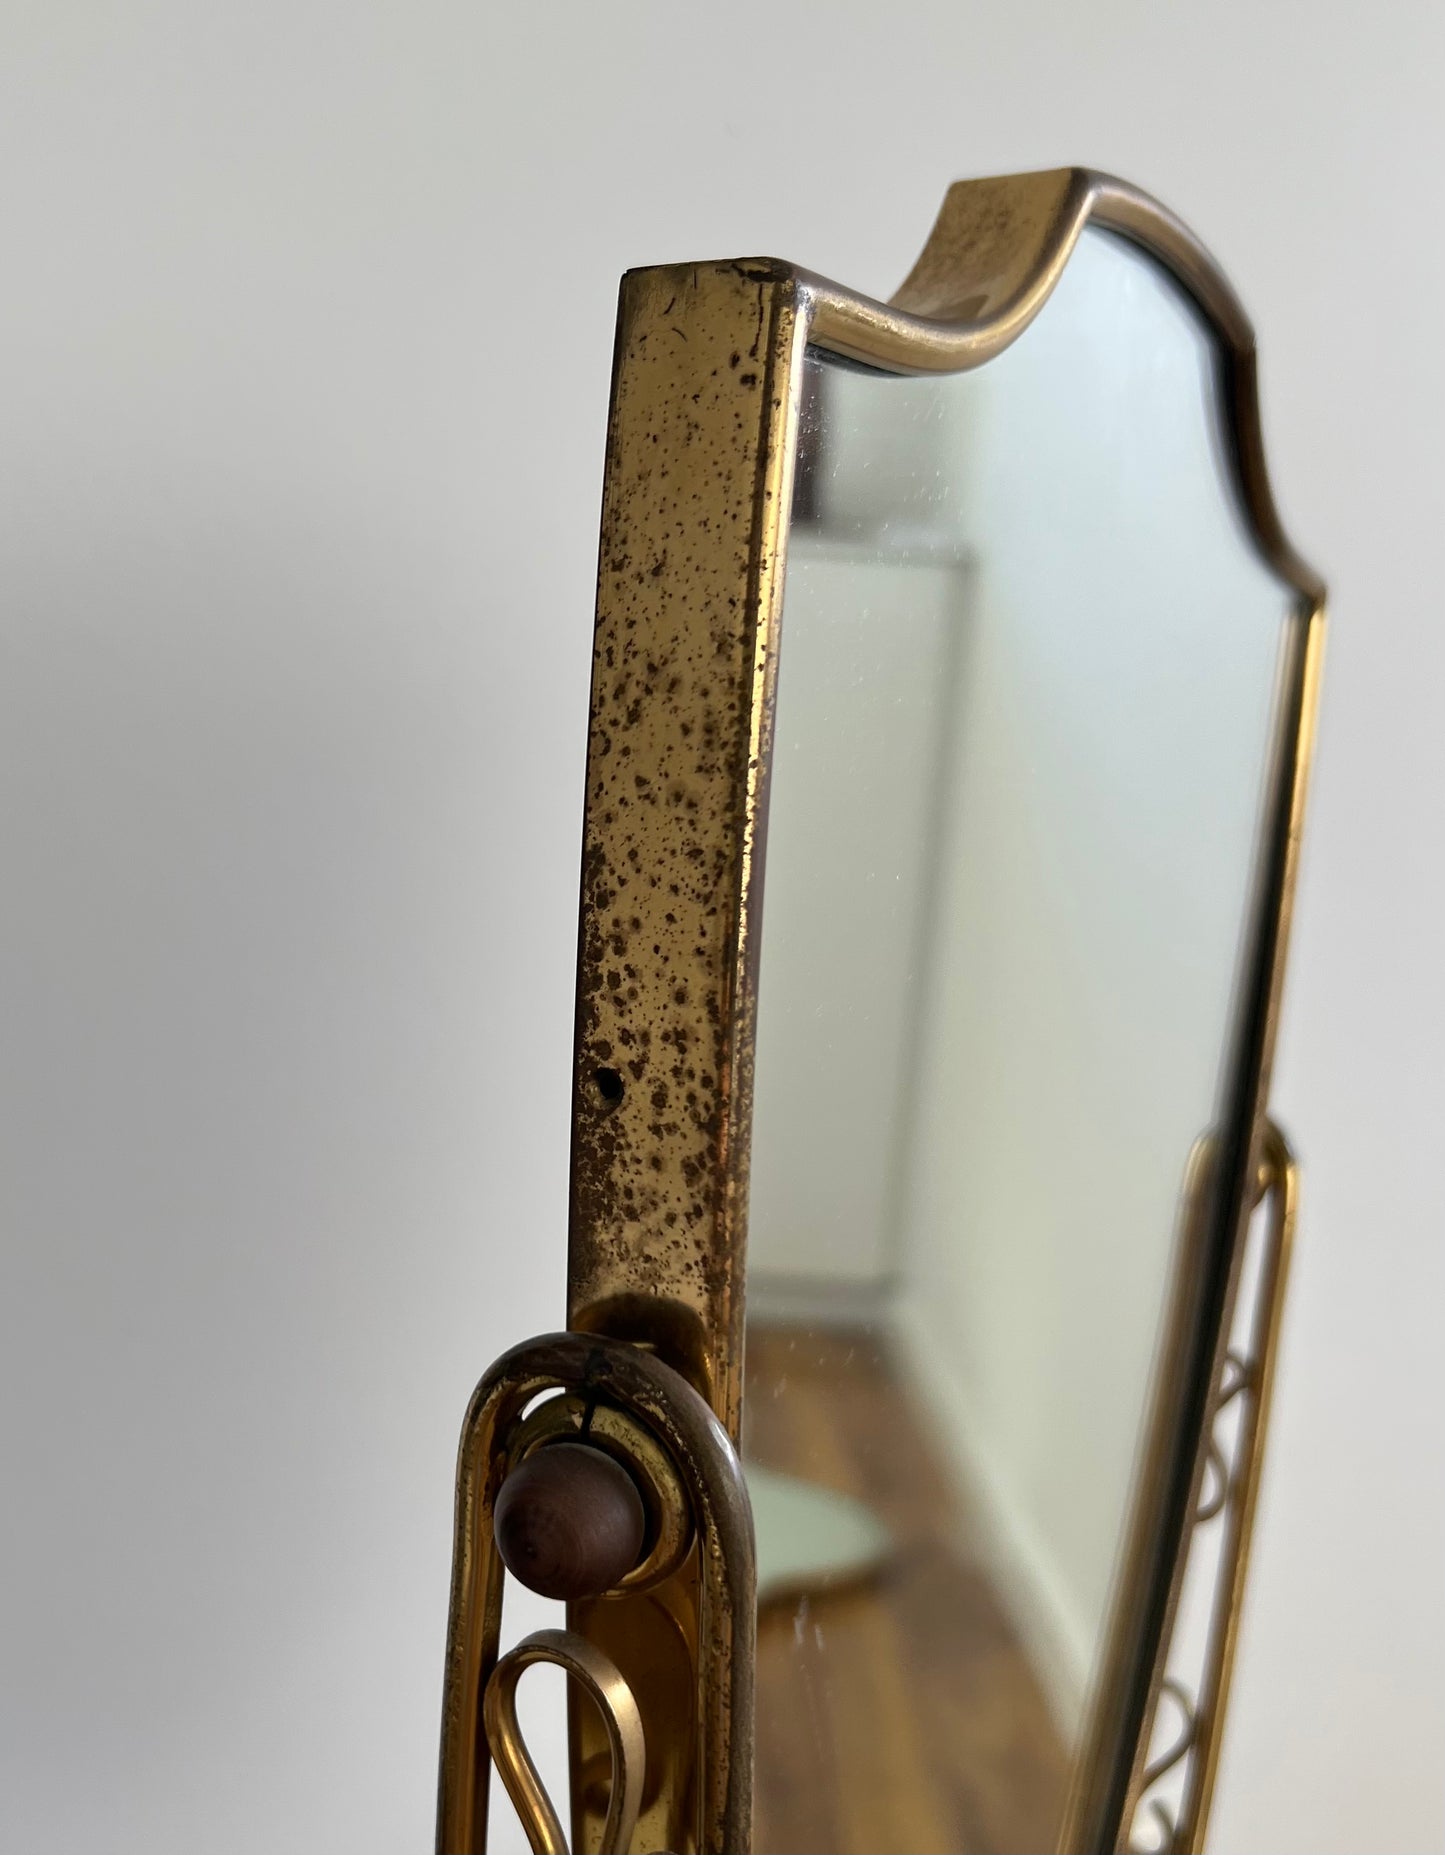 - 1950s Italian Shield Table Mirror